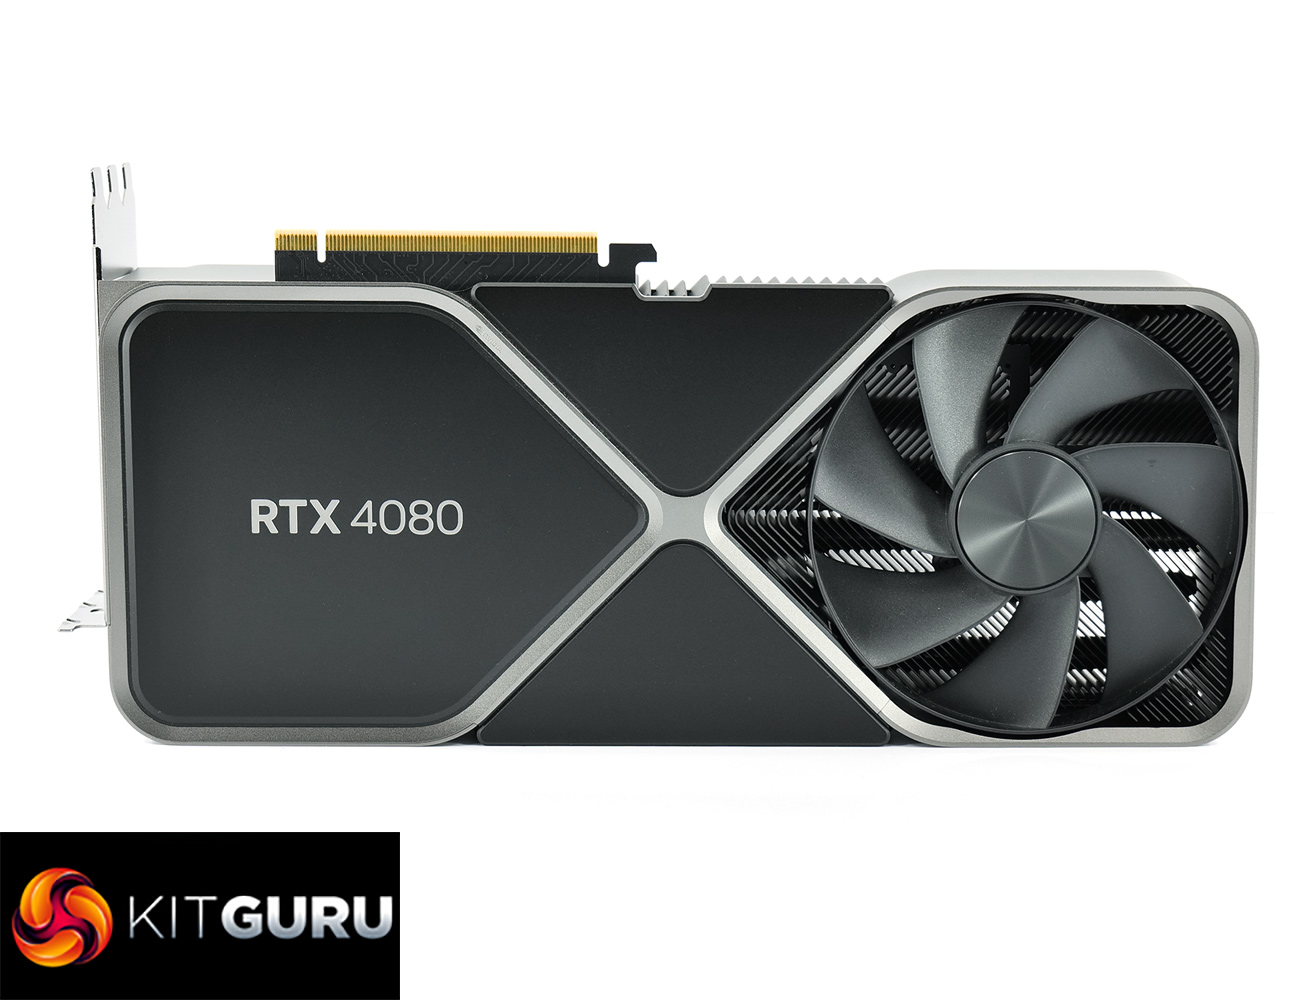 Nvidia RTX 4080 price cut in UK suggests GPU might get even